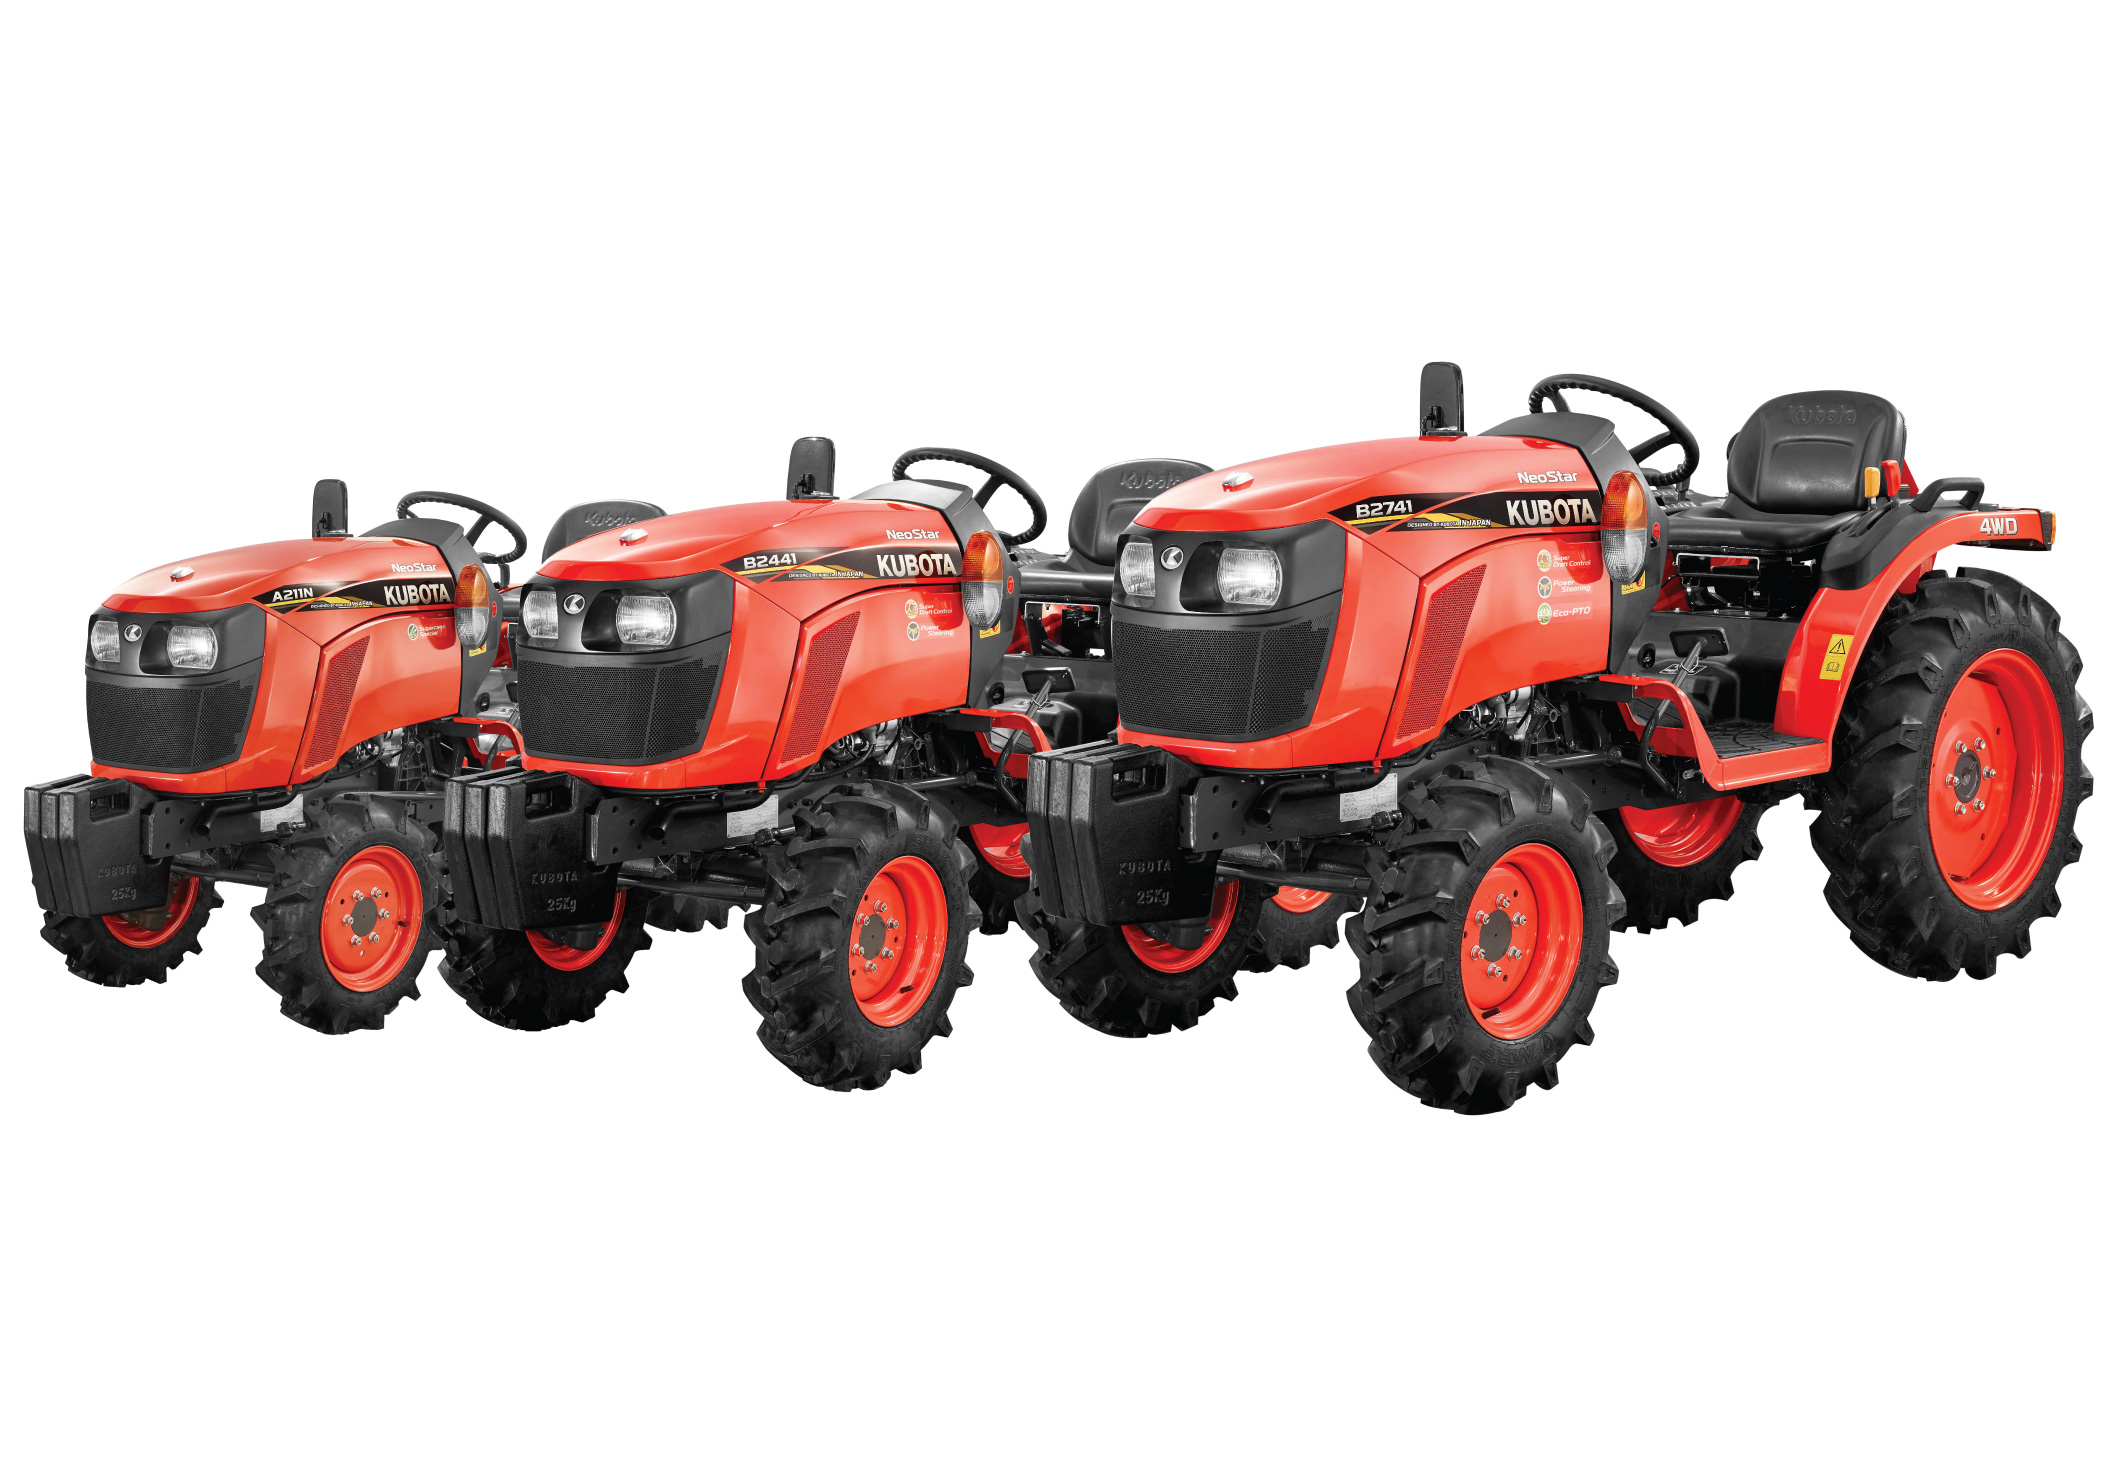 Kubota Tractors: Tackling Agricultural and Construction Tasks in Israel